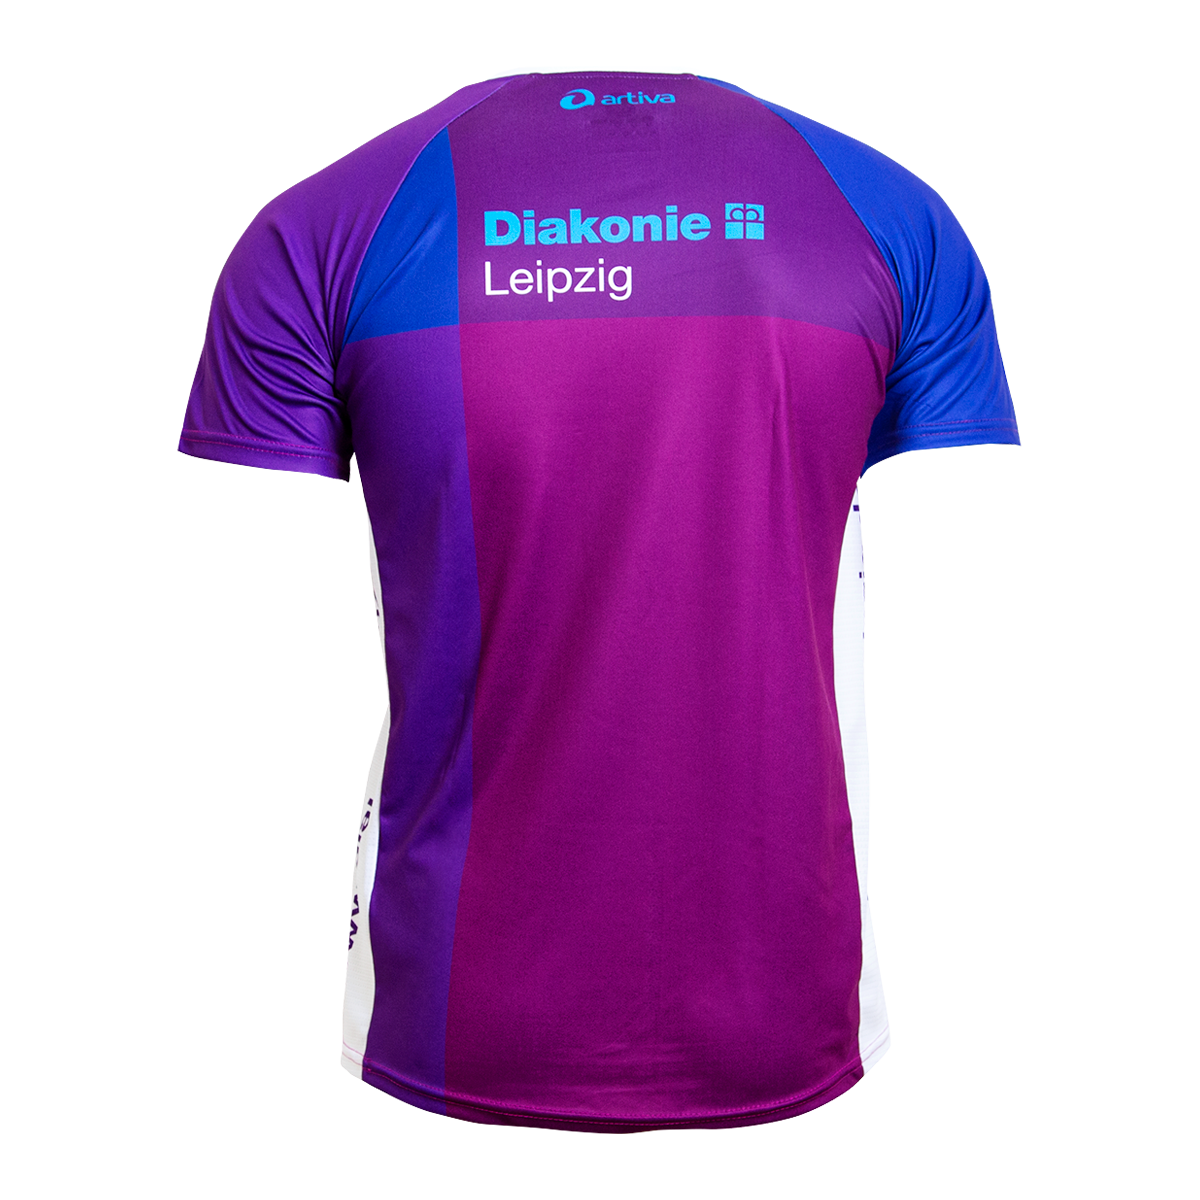 Diakonie_Leipzig_runningshirt_men_back